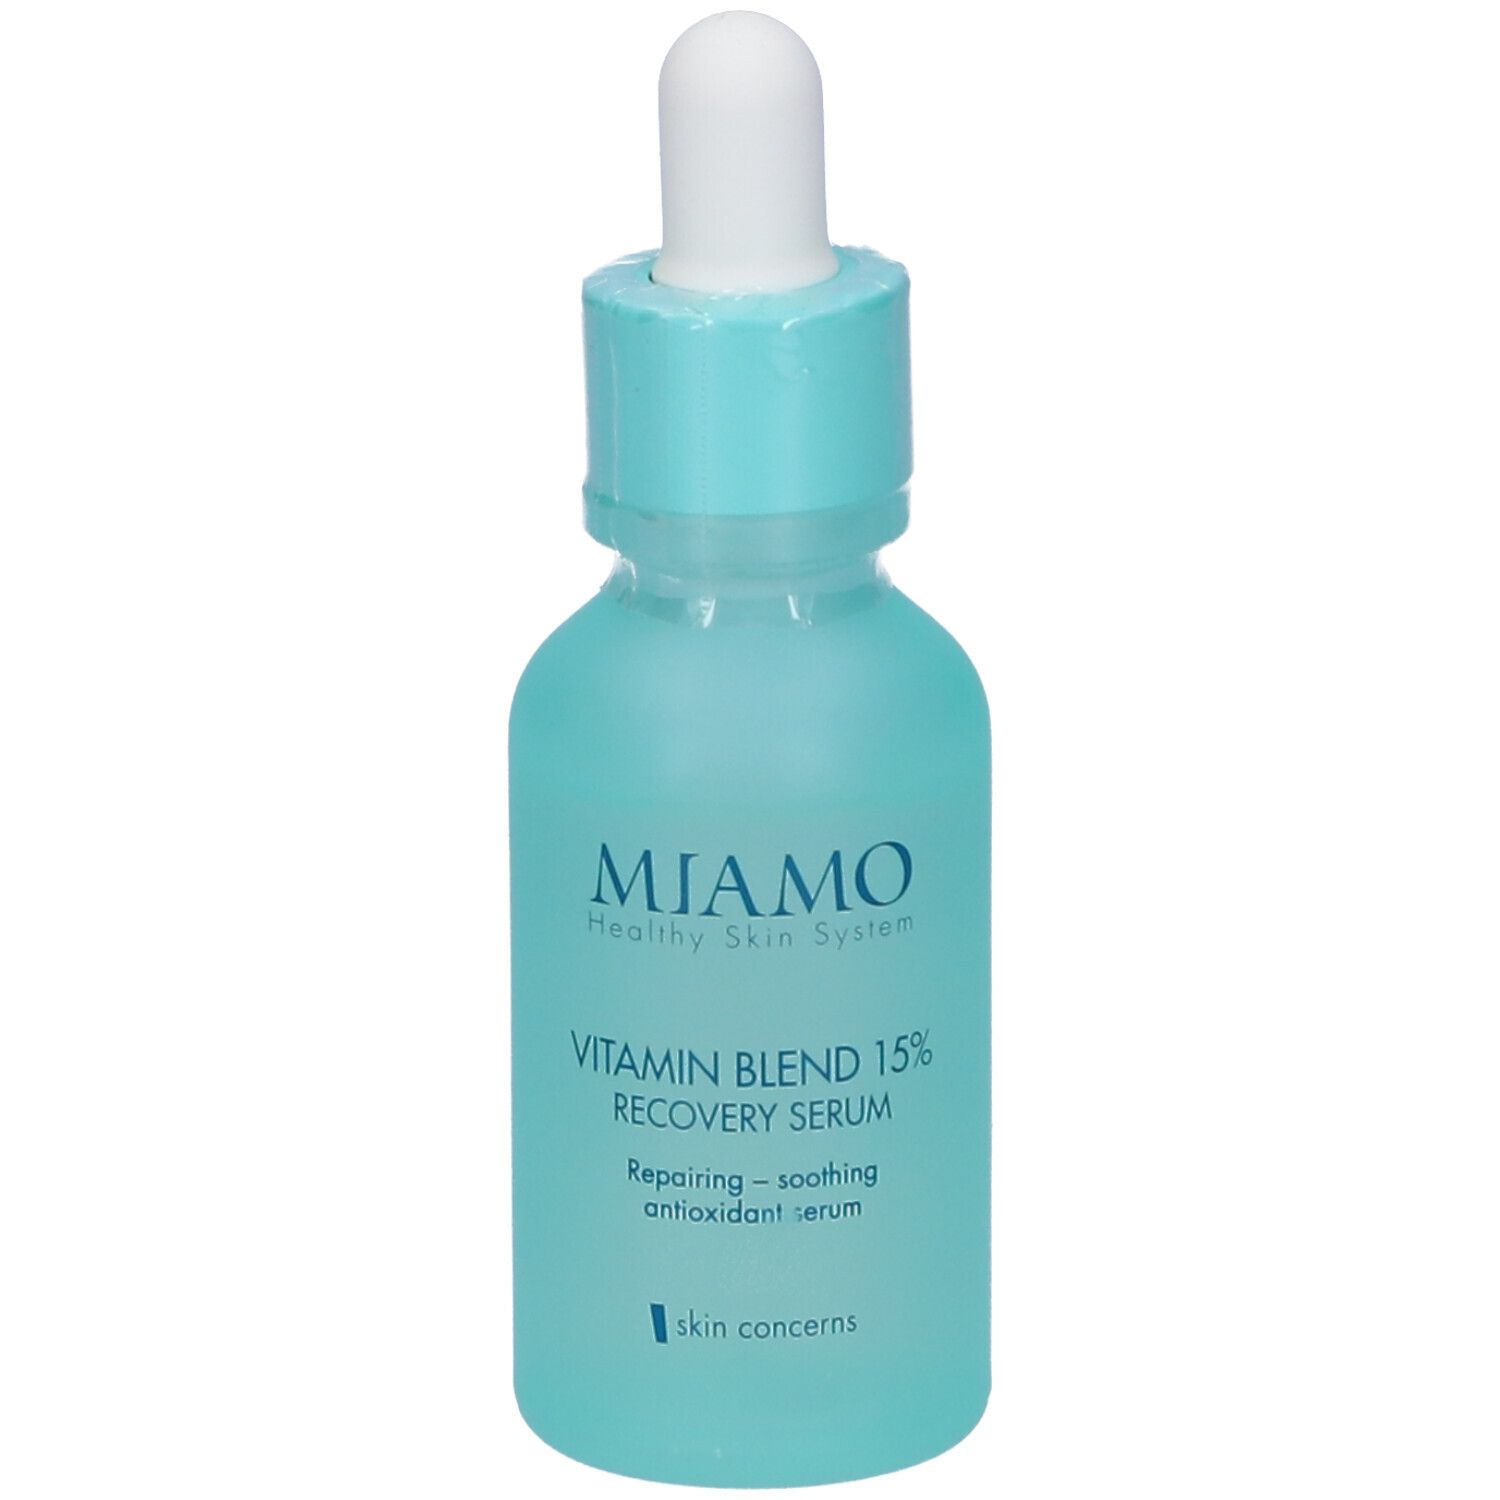 Miamo Skin Concerns Vitamin Blend 15% Recovery Serum